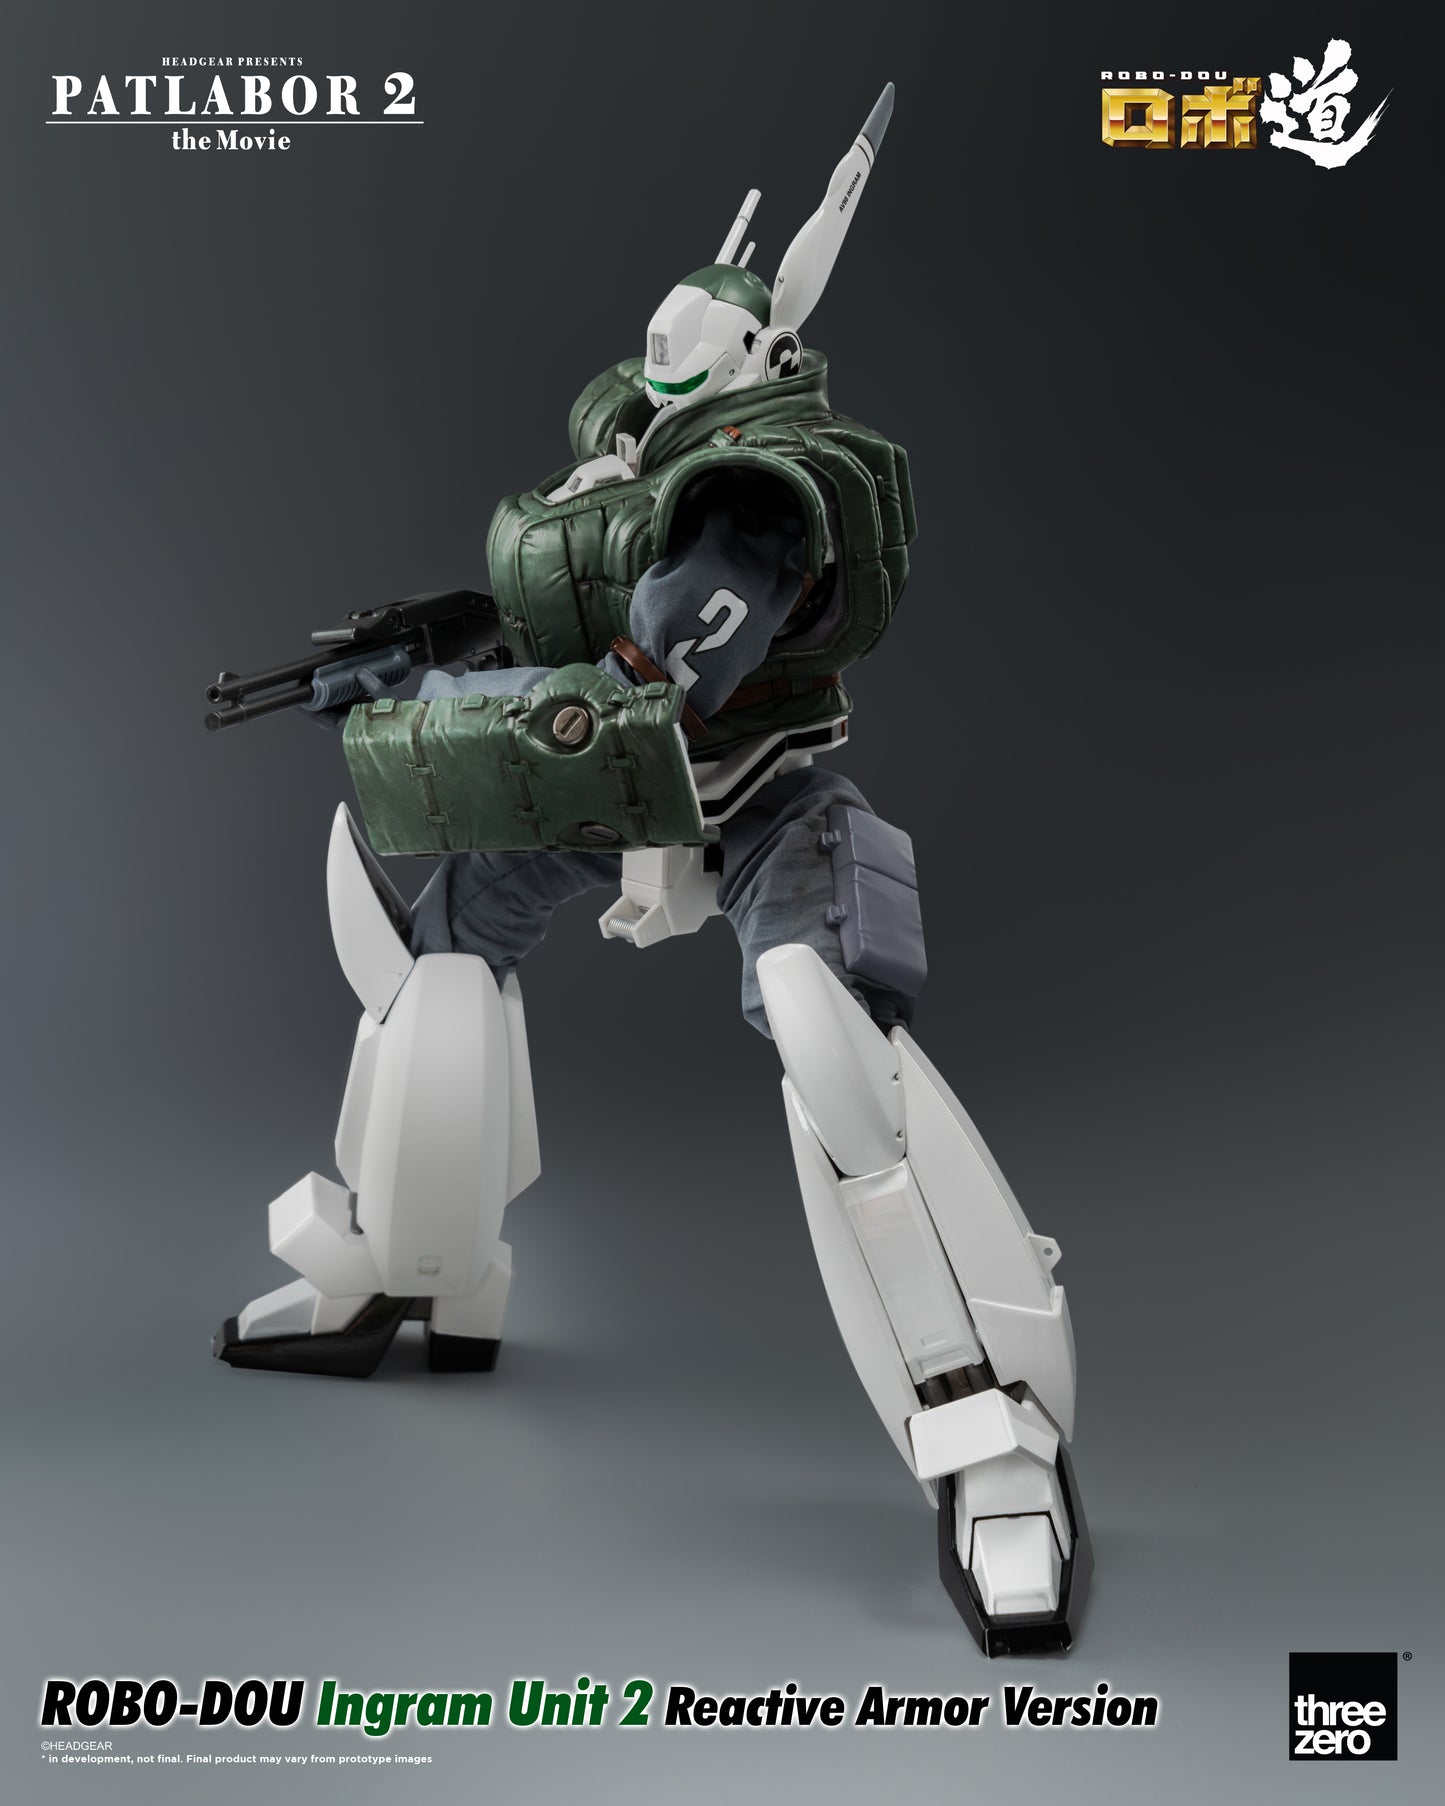 Patlabor 2: The Movie - ROBO-DOU Ingram Unit 2 Reactive Armor Version holding shot gun pointing right